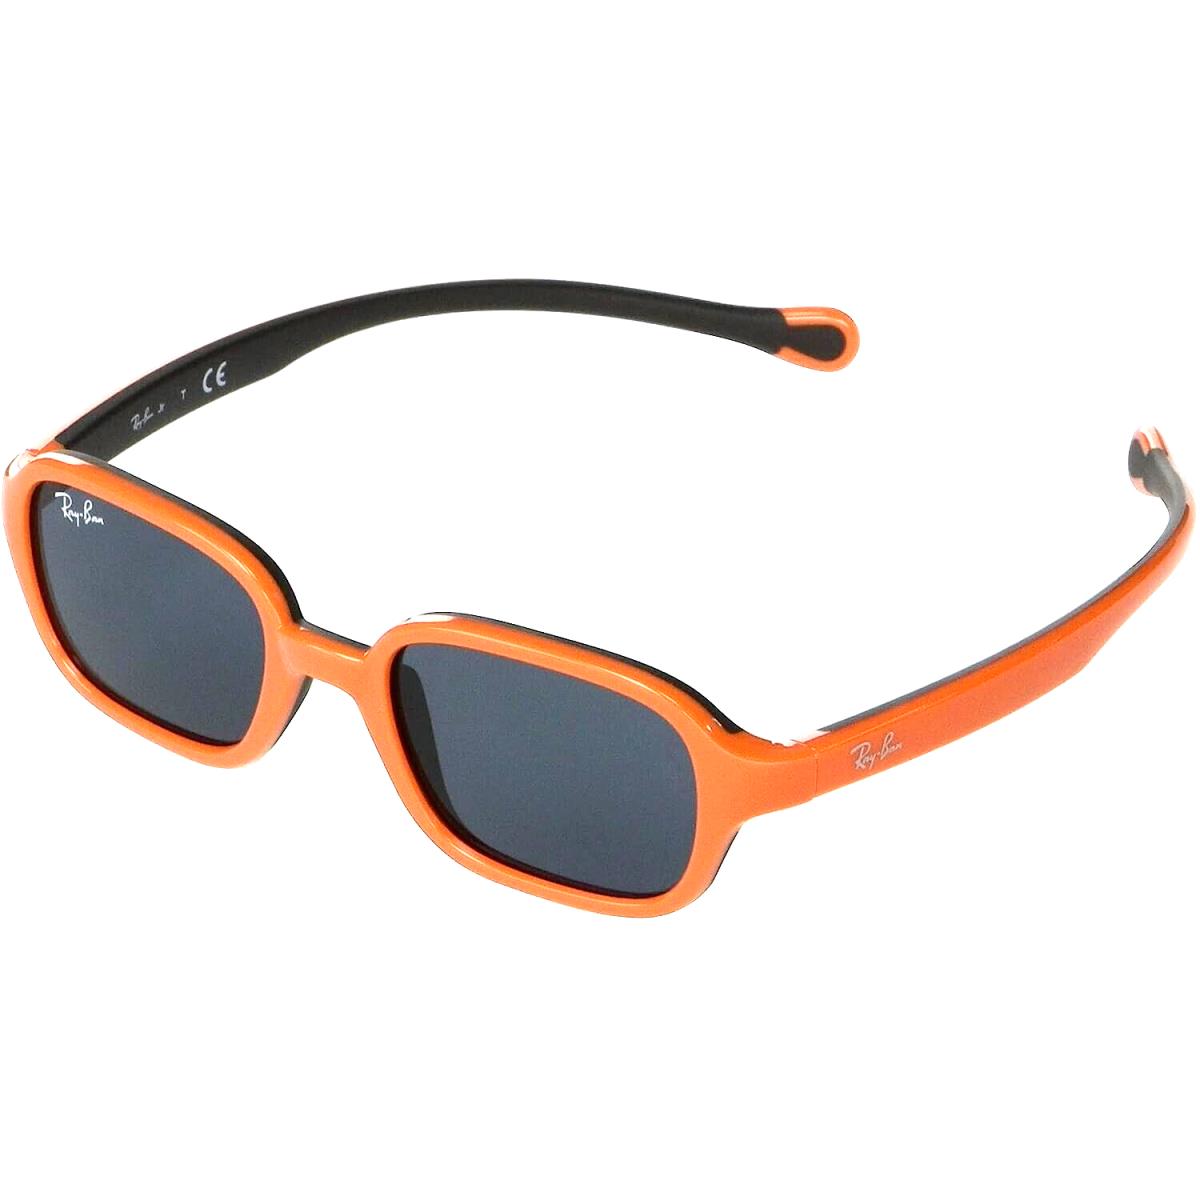 Ray Ban Kids RJ9074S 7095/87 Orange Sunglasses 39-16-120 W/case